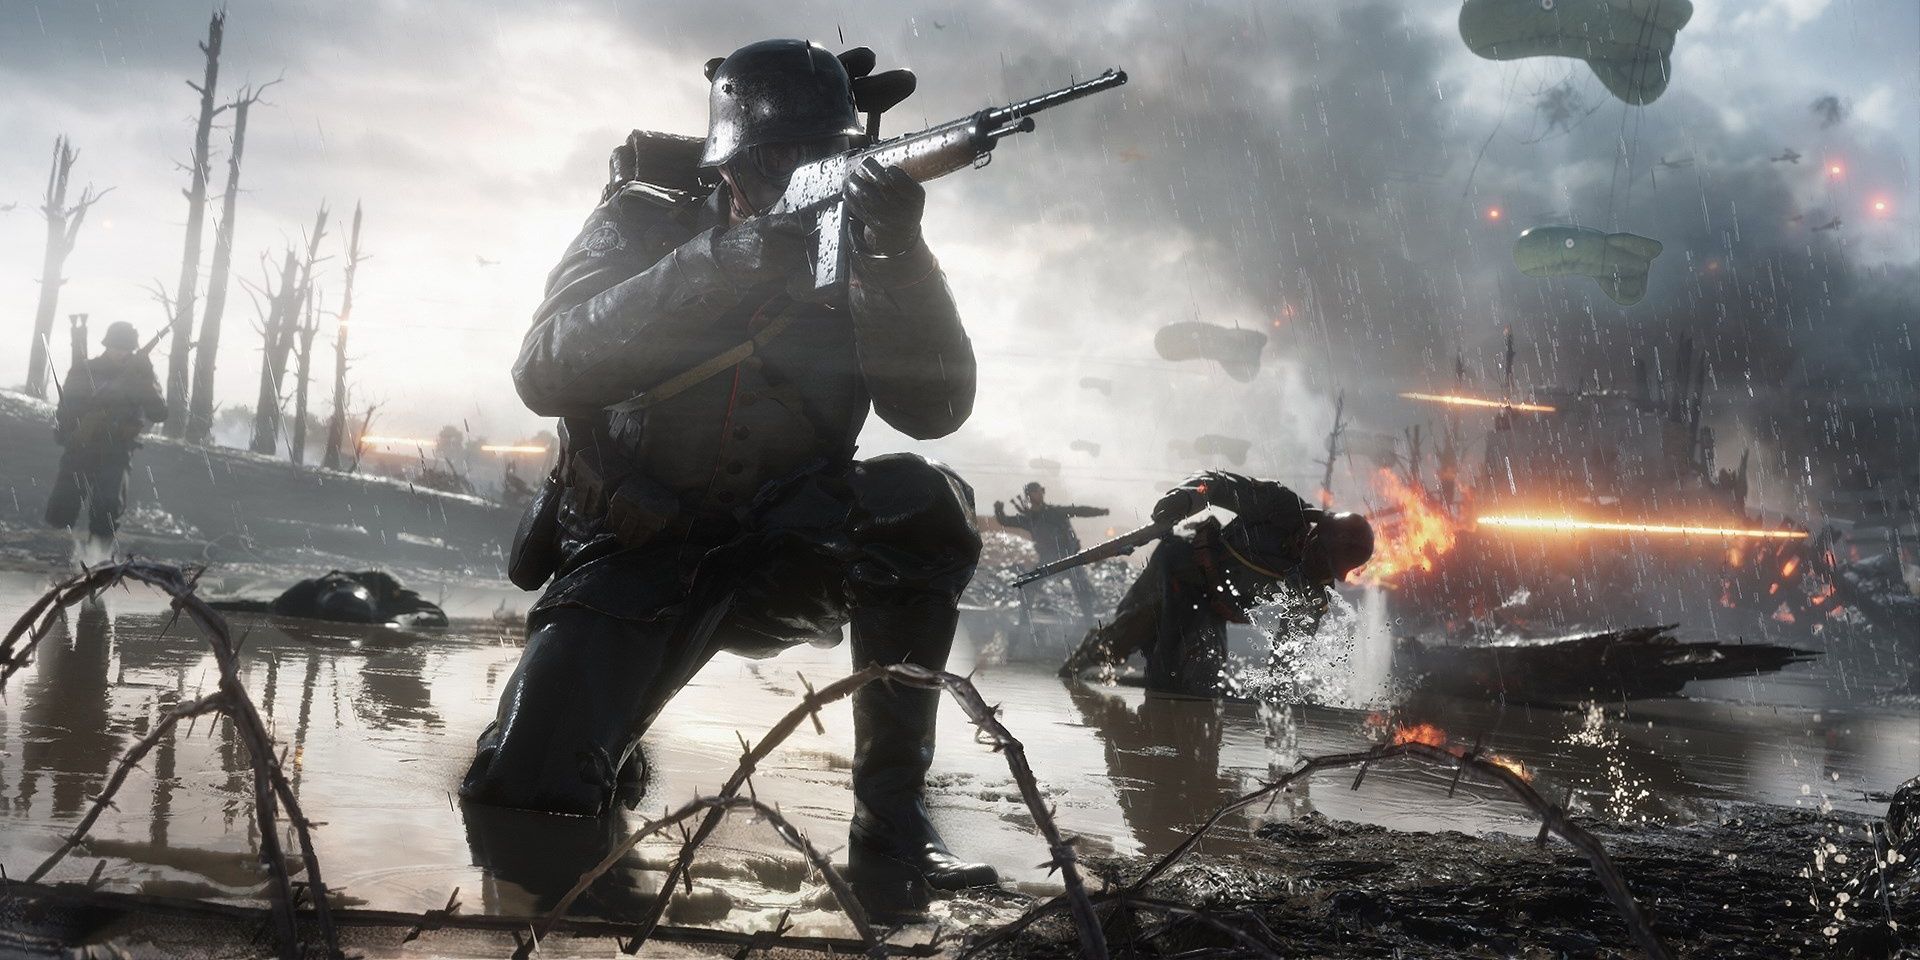 Battlefield 1's promotional image